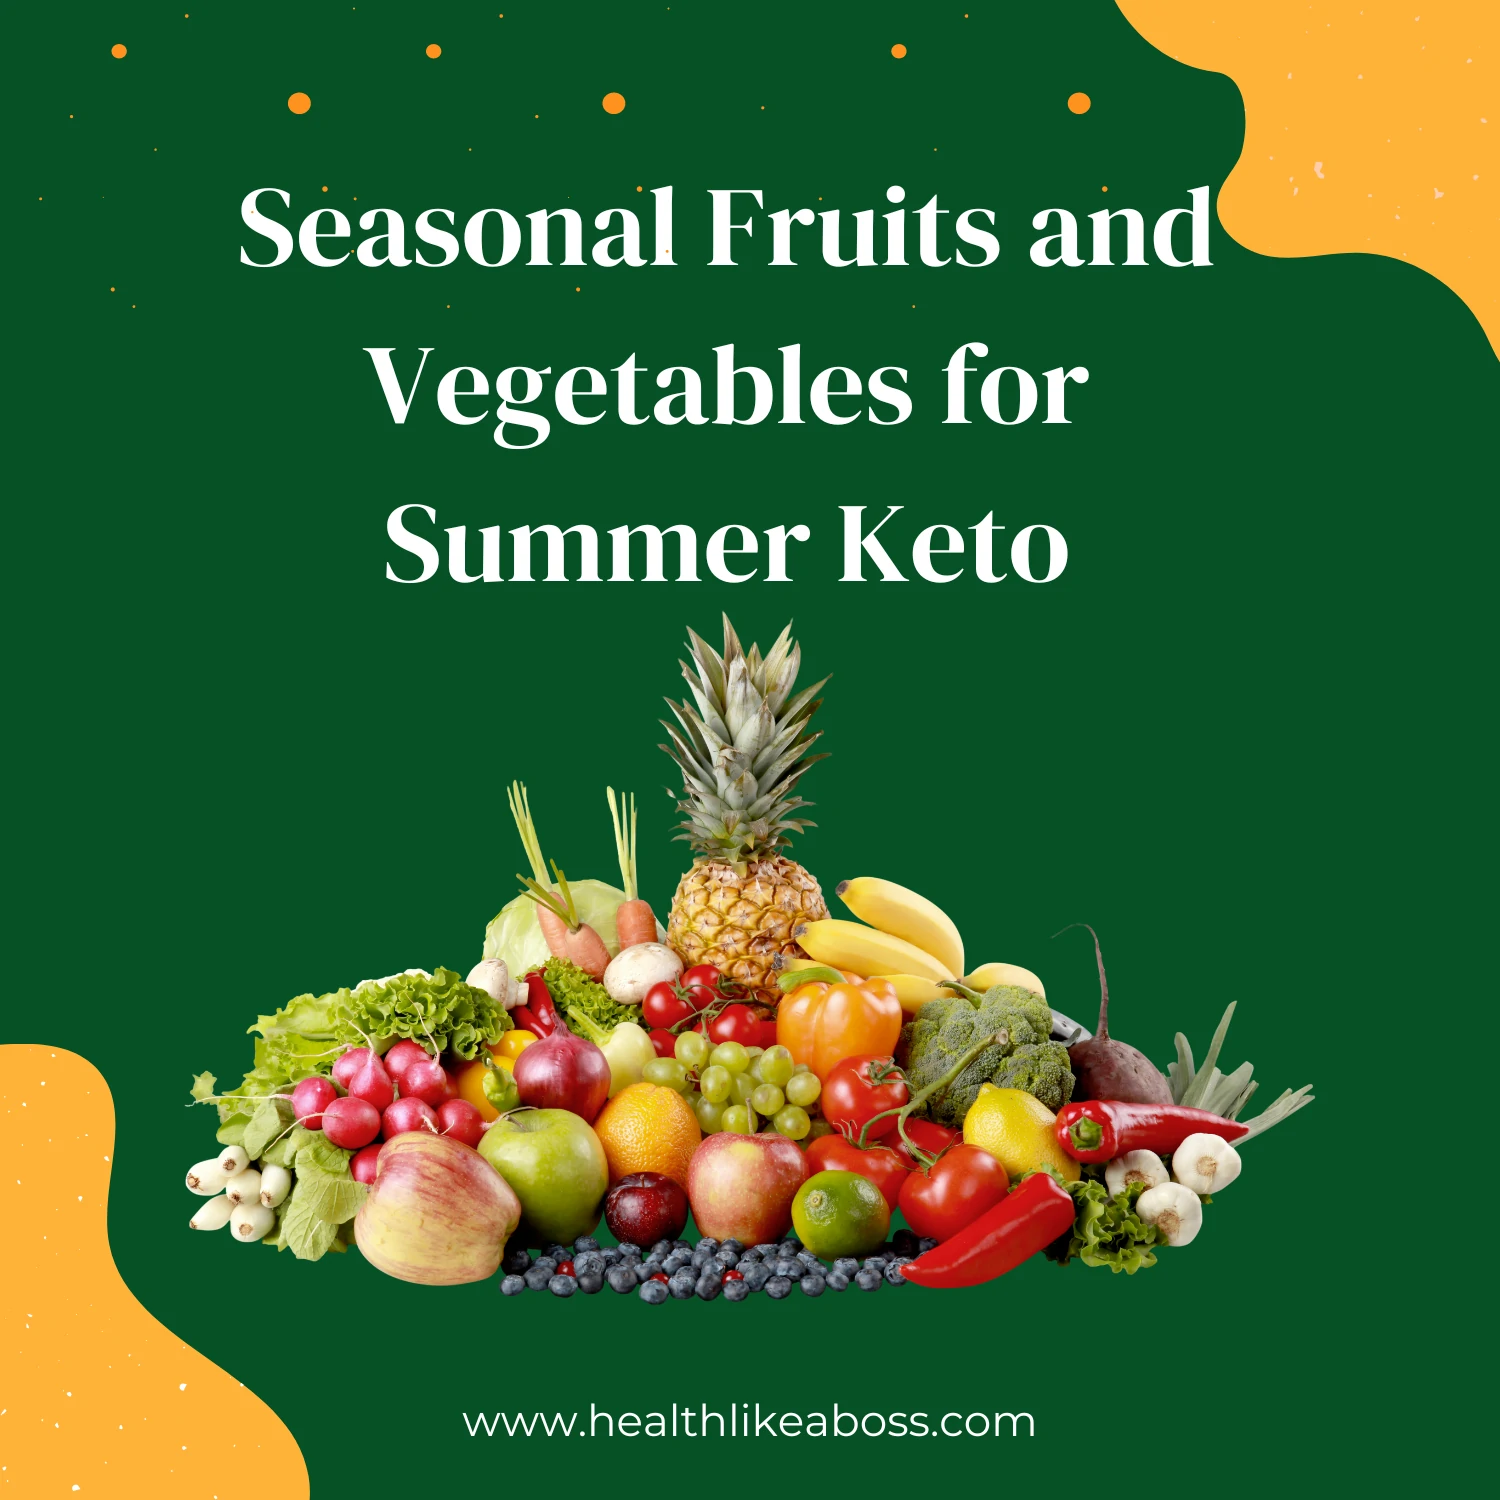 Seasonal Fruits and Vegetables for Summer Keto